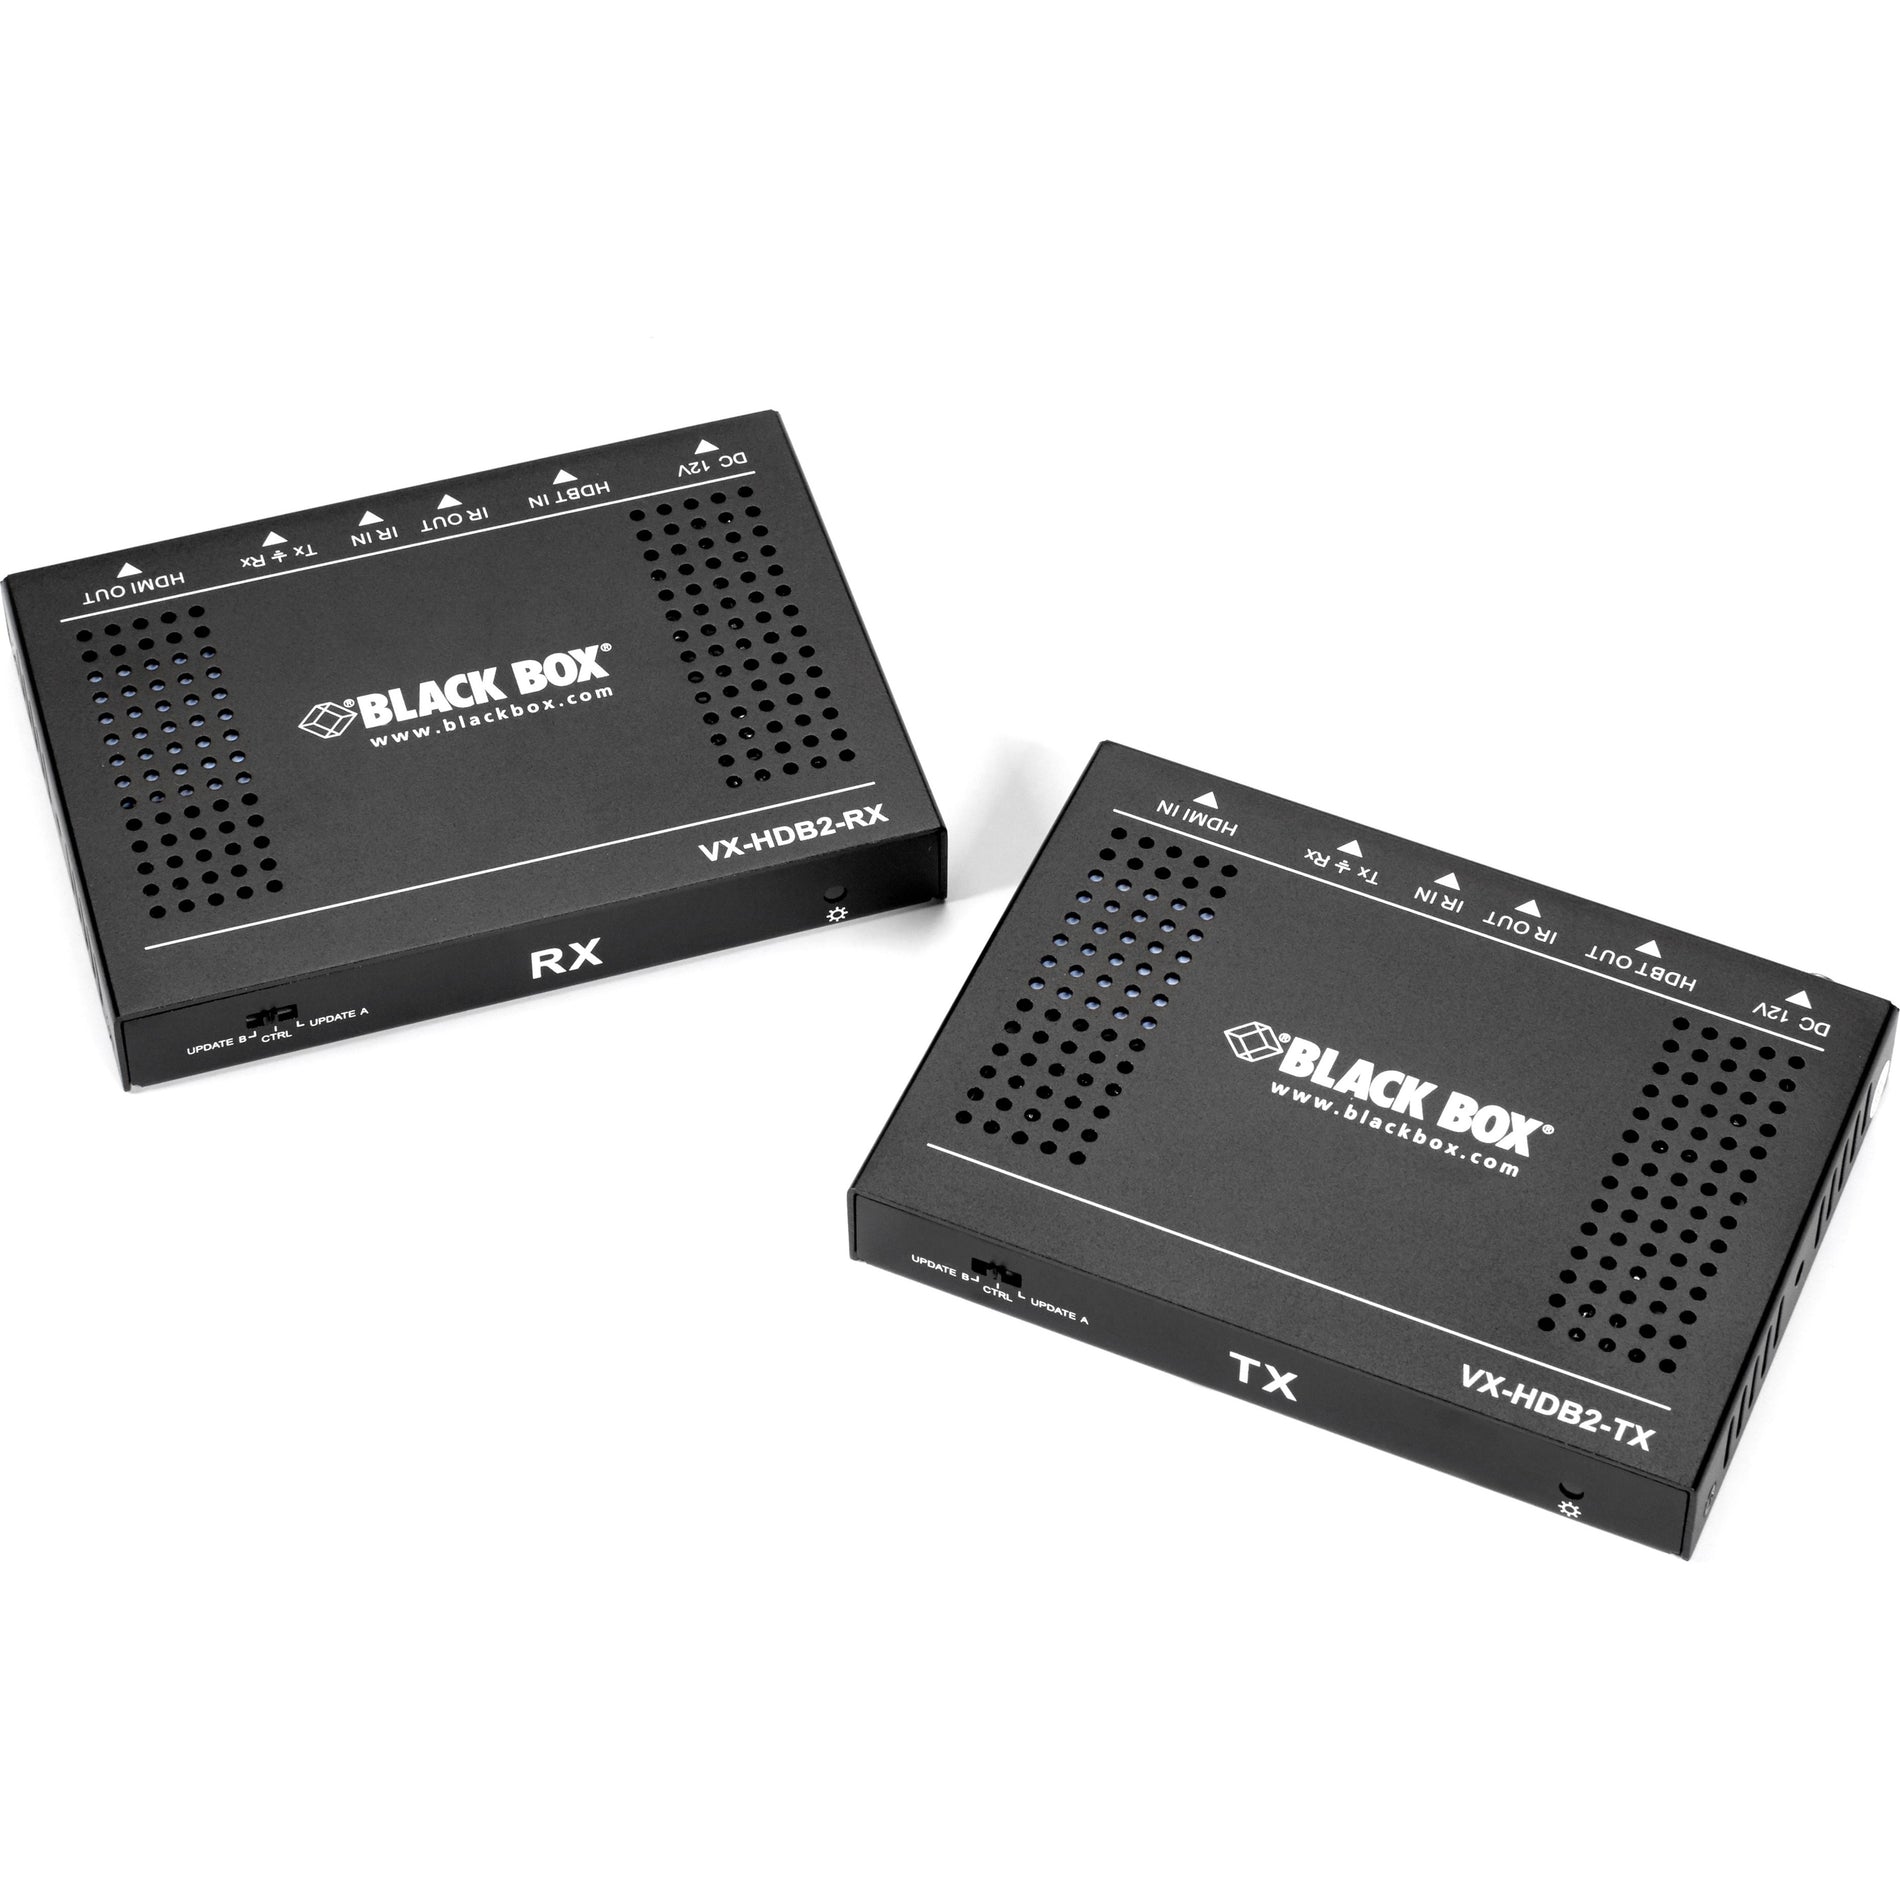 Black Box VX-HDB2-KIT HDR CATx Video Extender RX & TX - 4K HDMI 2.0, 60Hz, 4:4:4, 2-Year Warranty